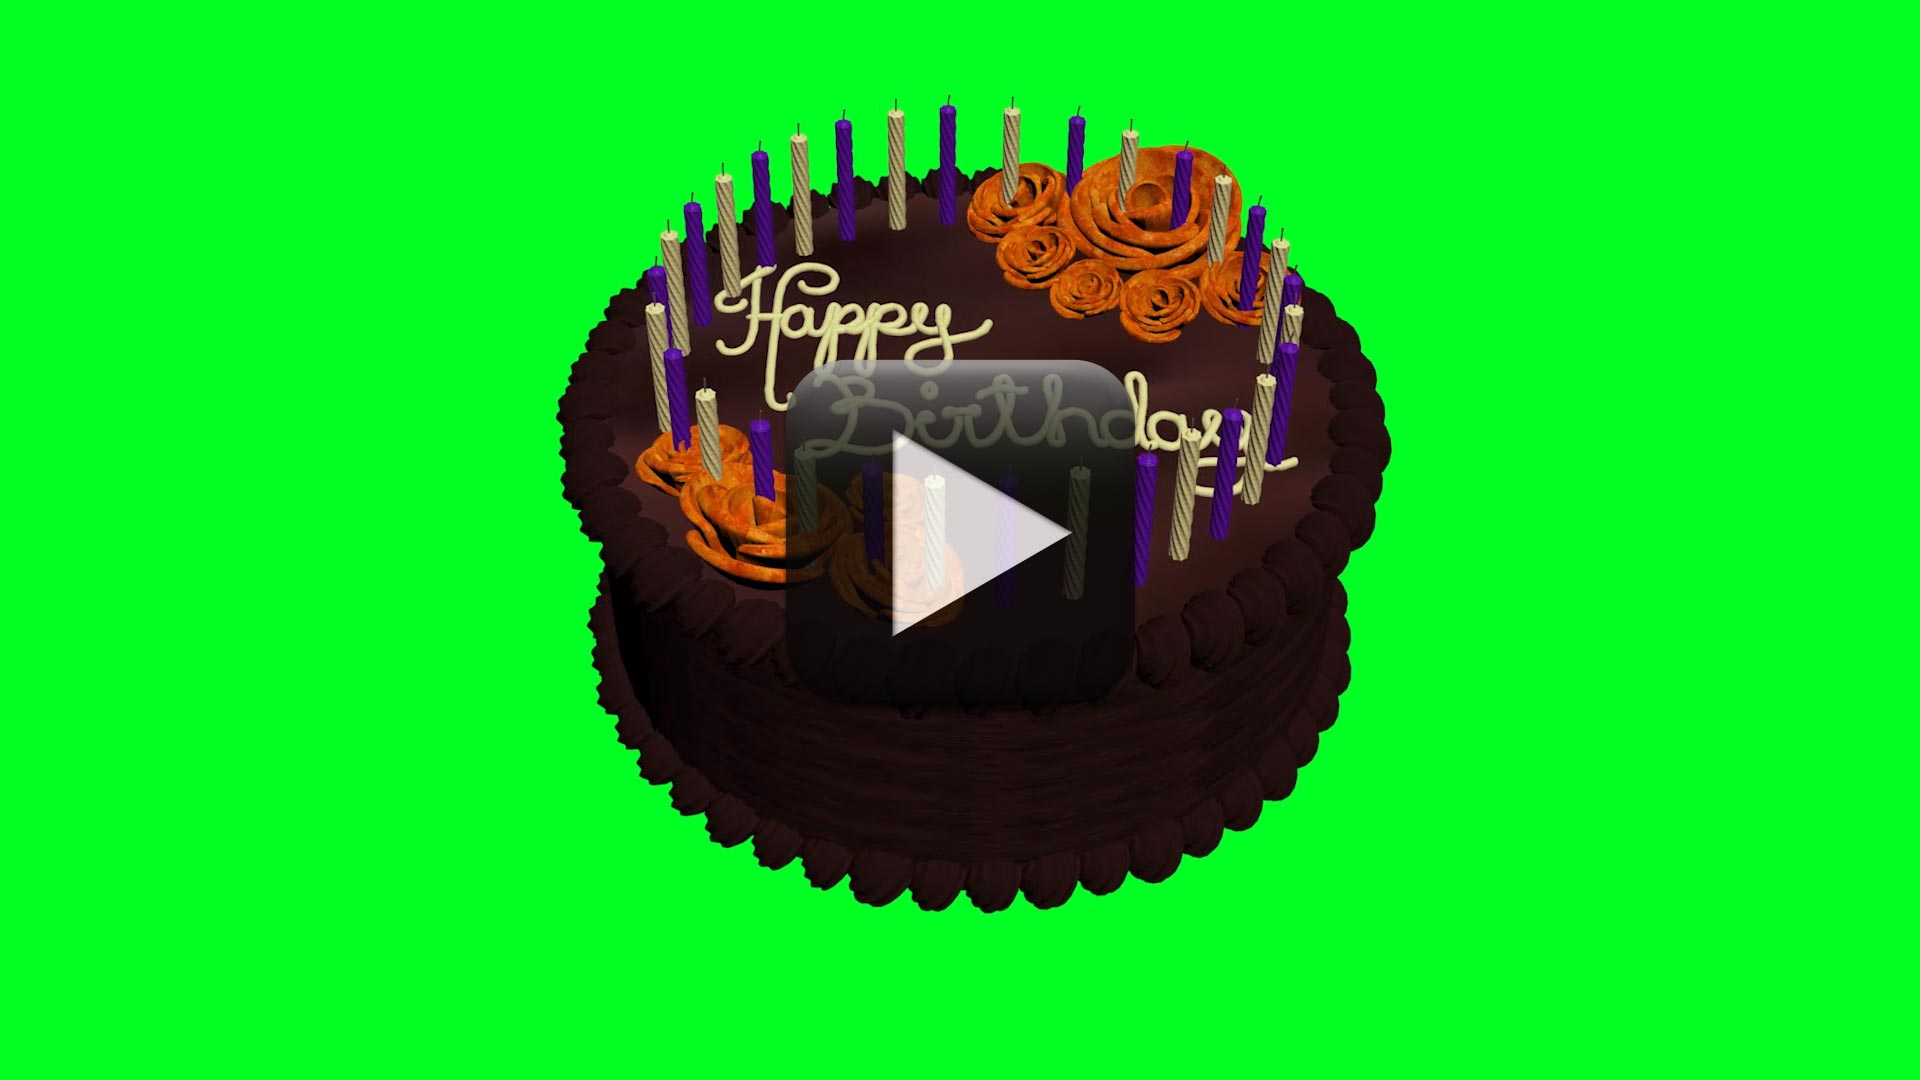 Greenscreen Cake (animated) - YouTube